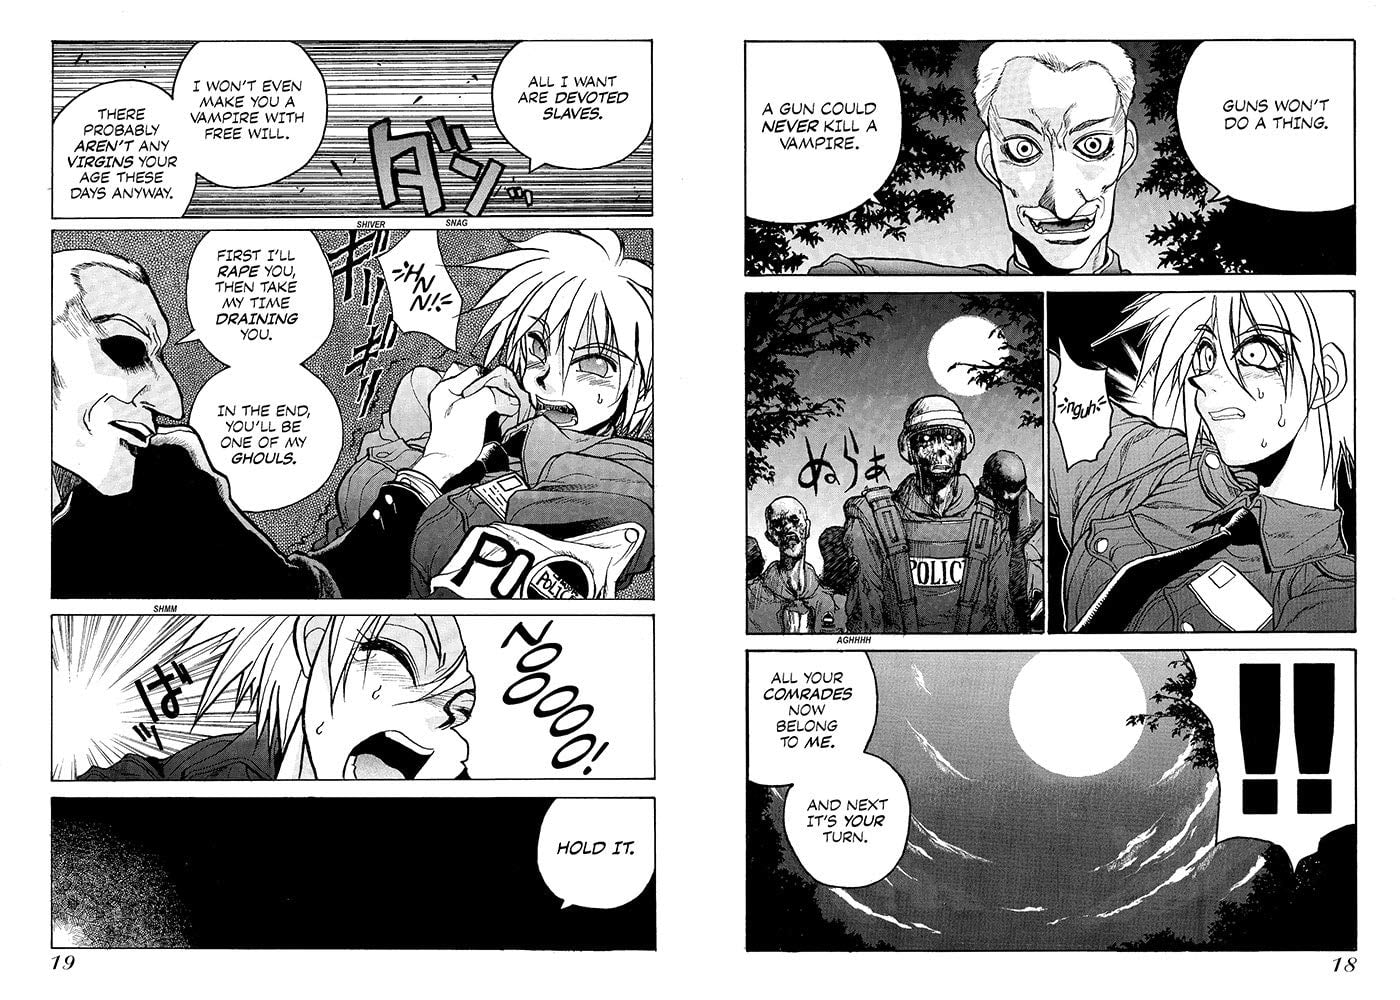 Manga Hellsing Volumes: 1, 2